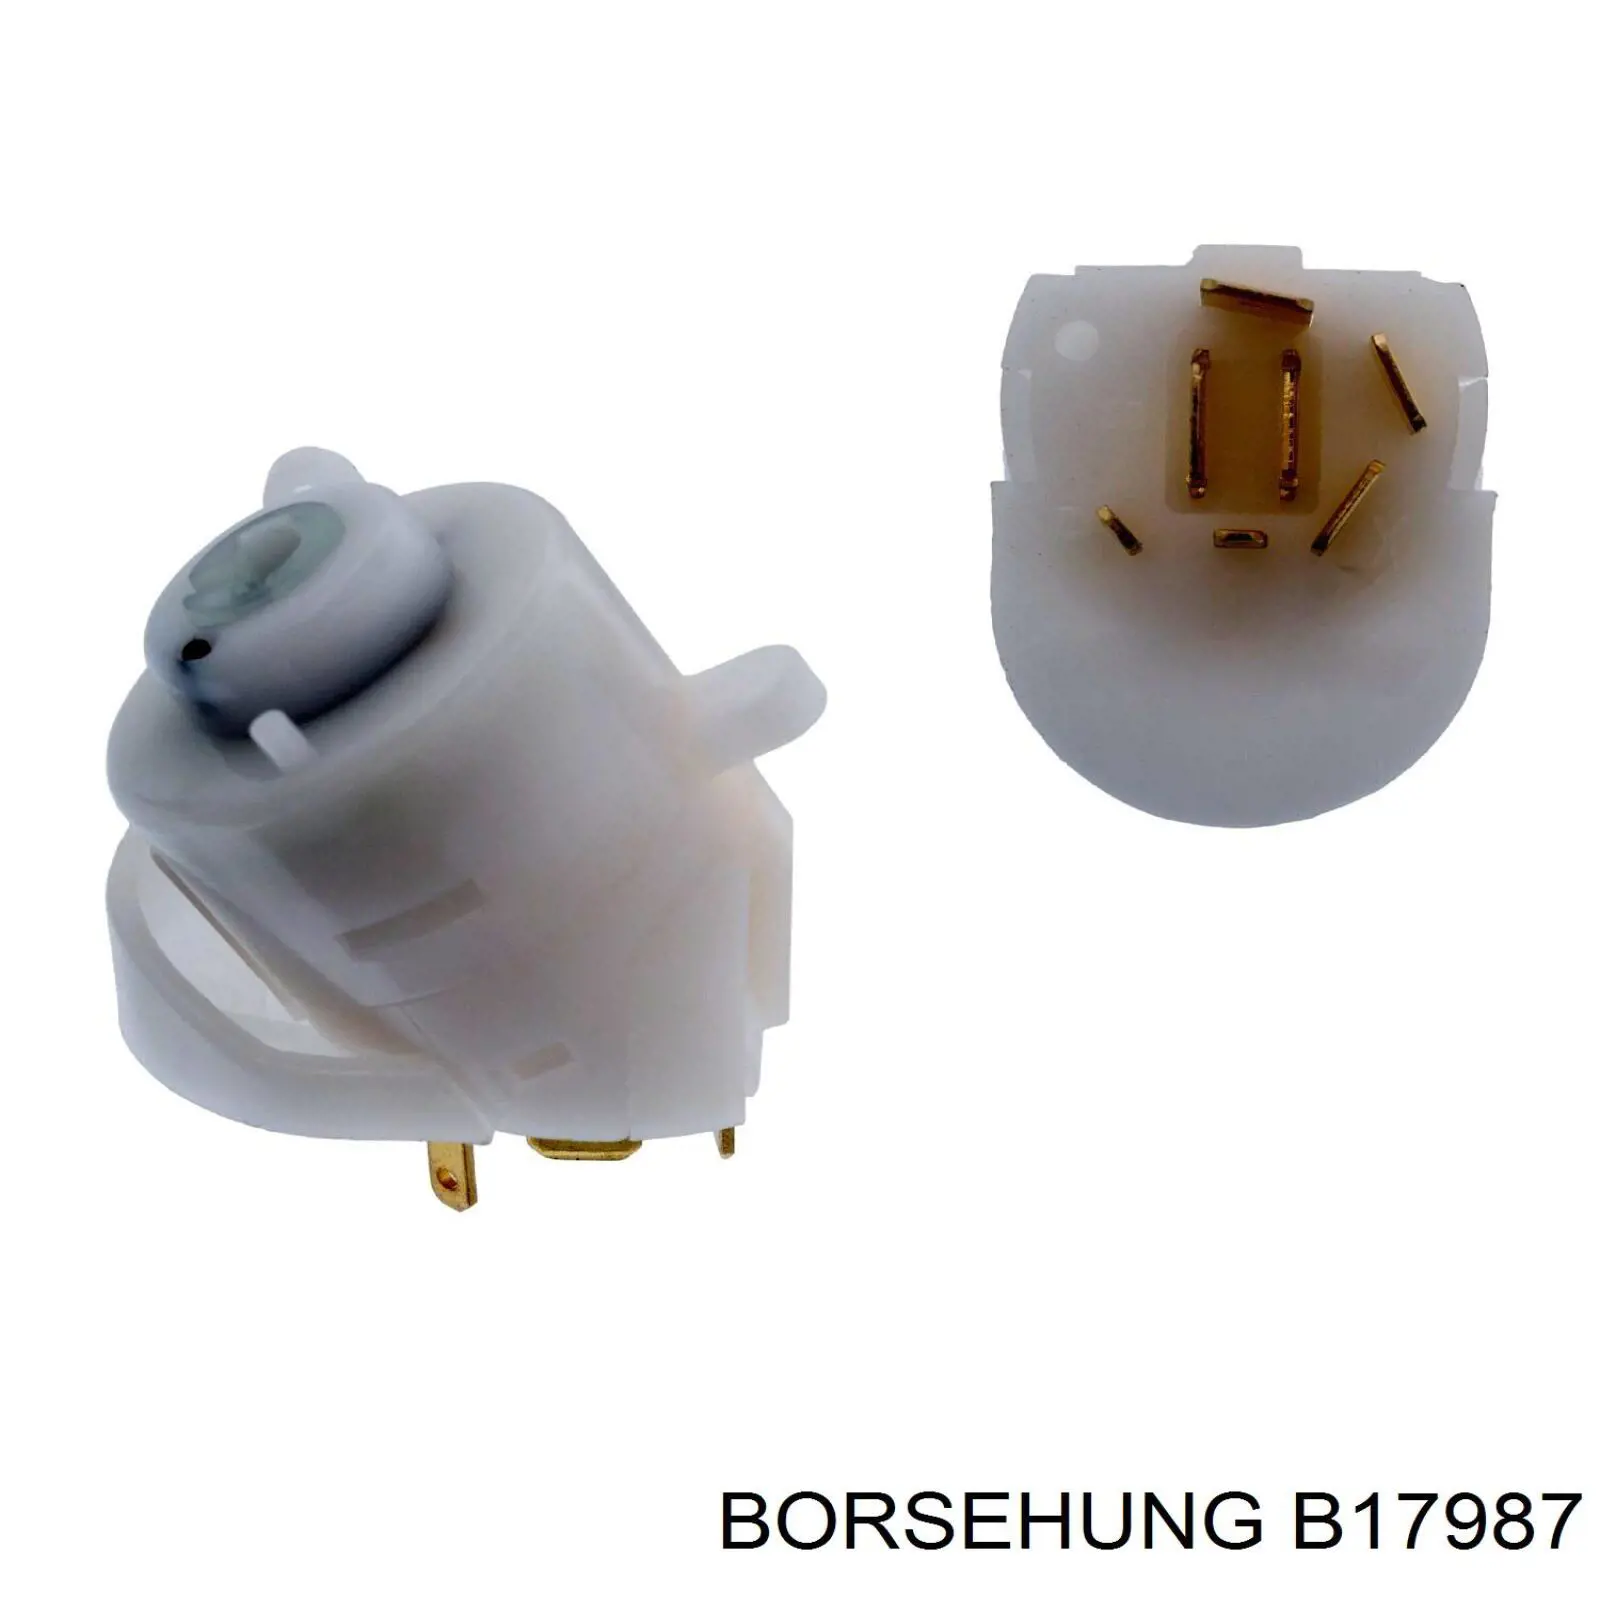 B17987 Borsehung interruptor de encendido / arranque